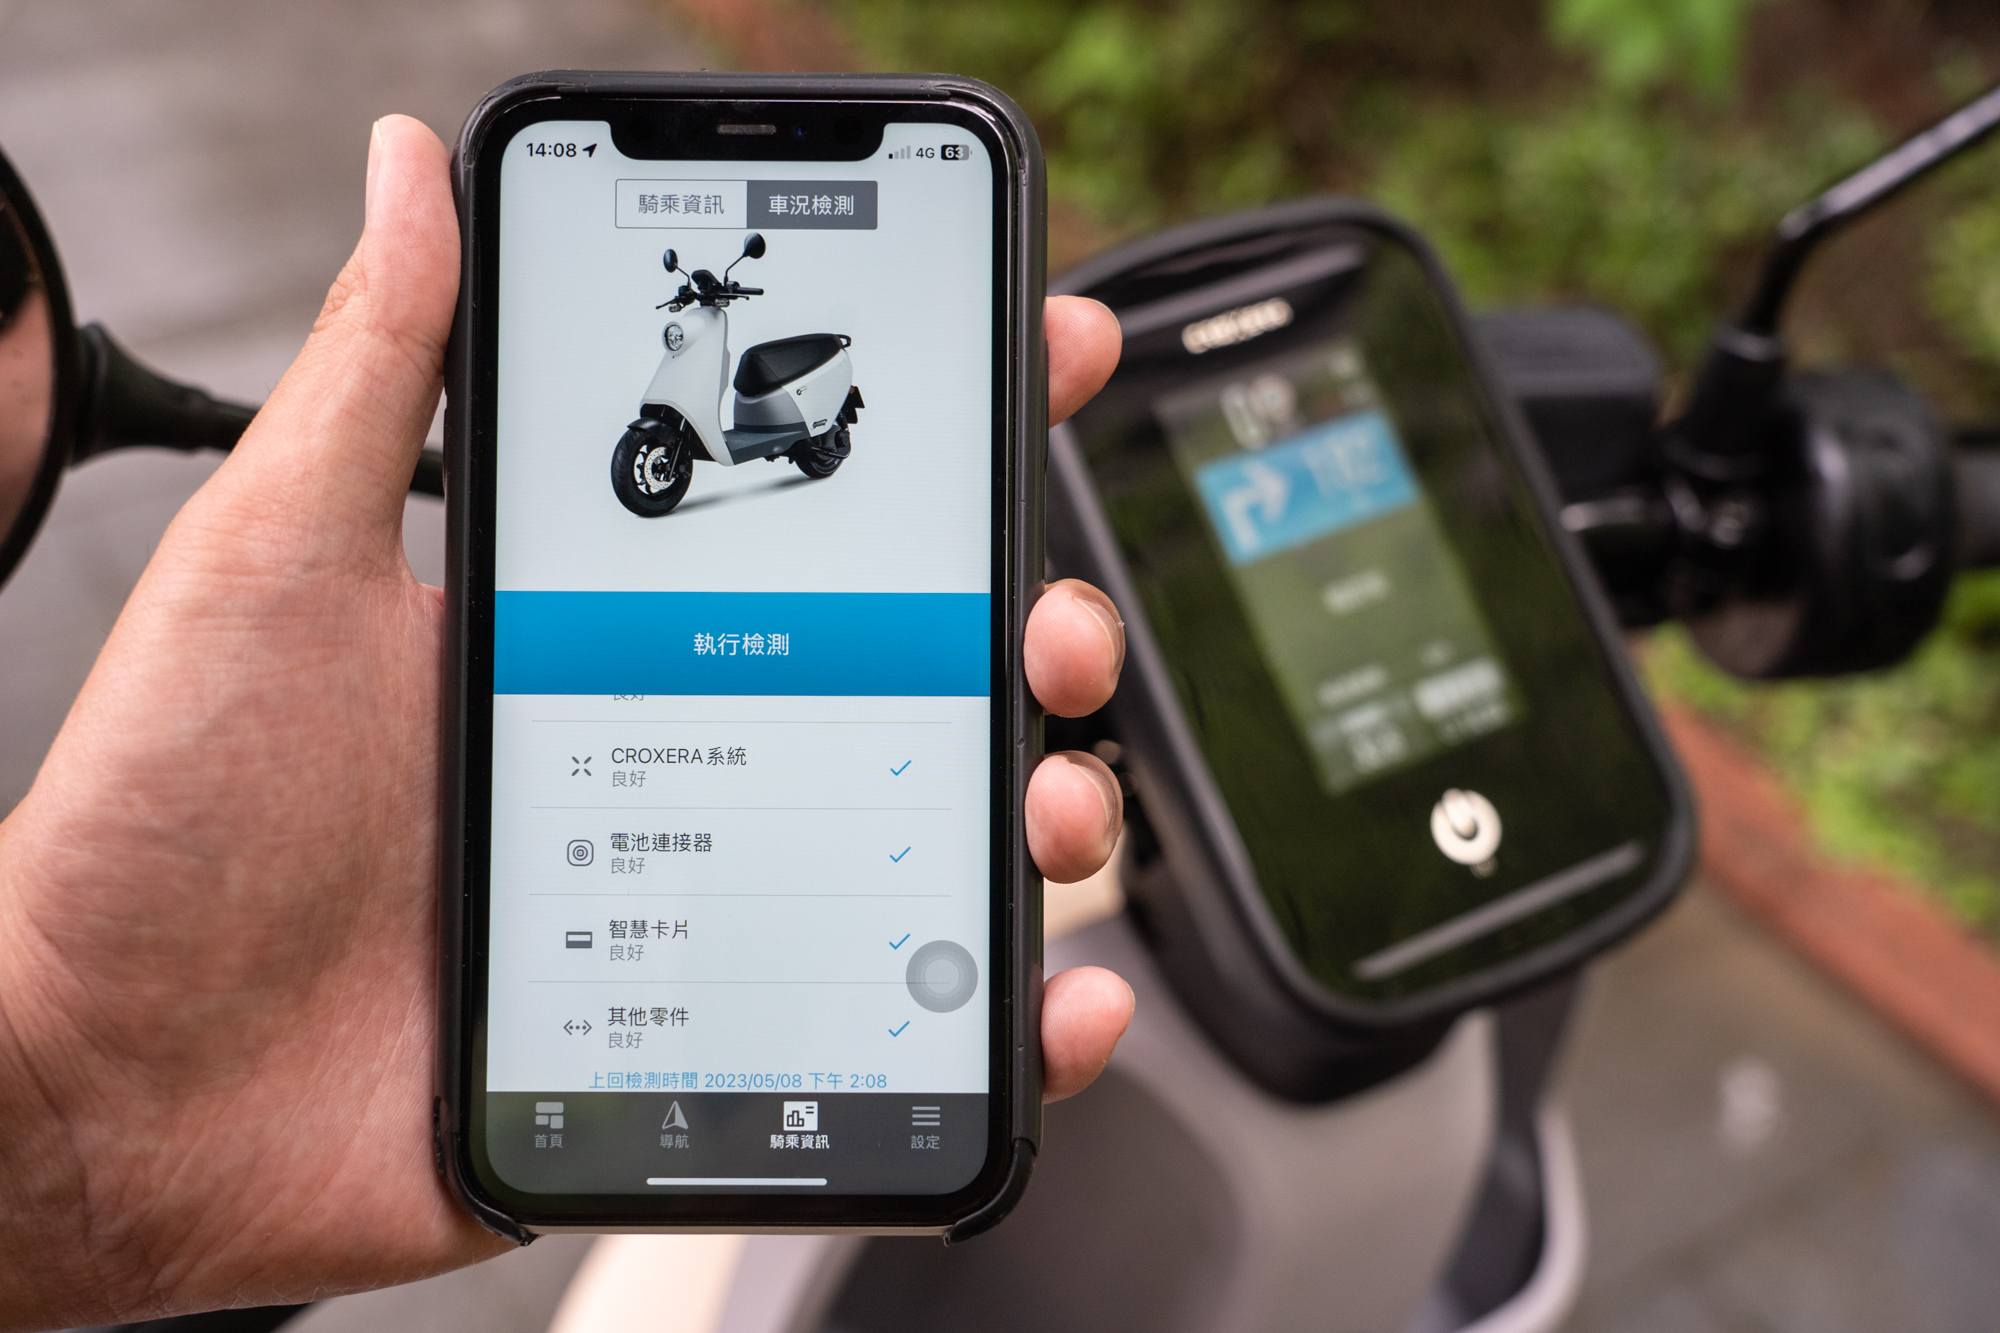  Croxera App 也可提供騎乘資訊、車況檢測等功能。